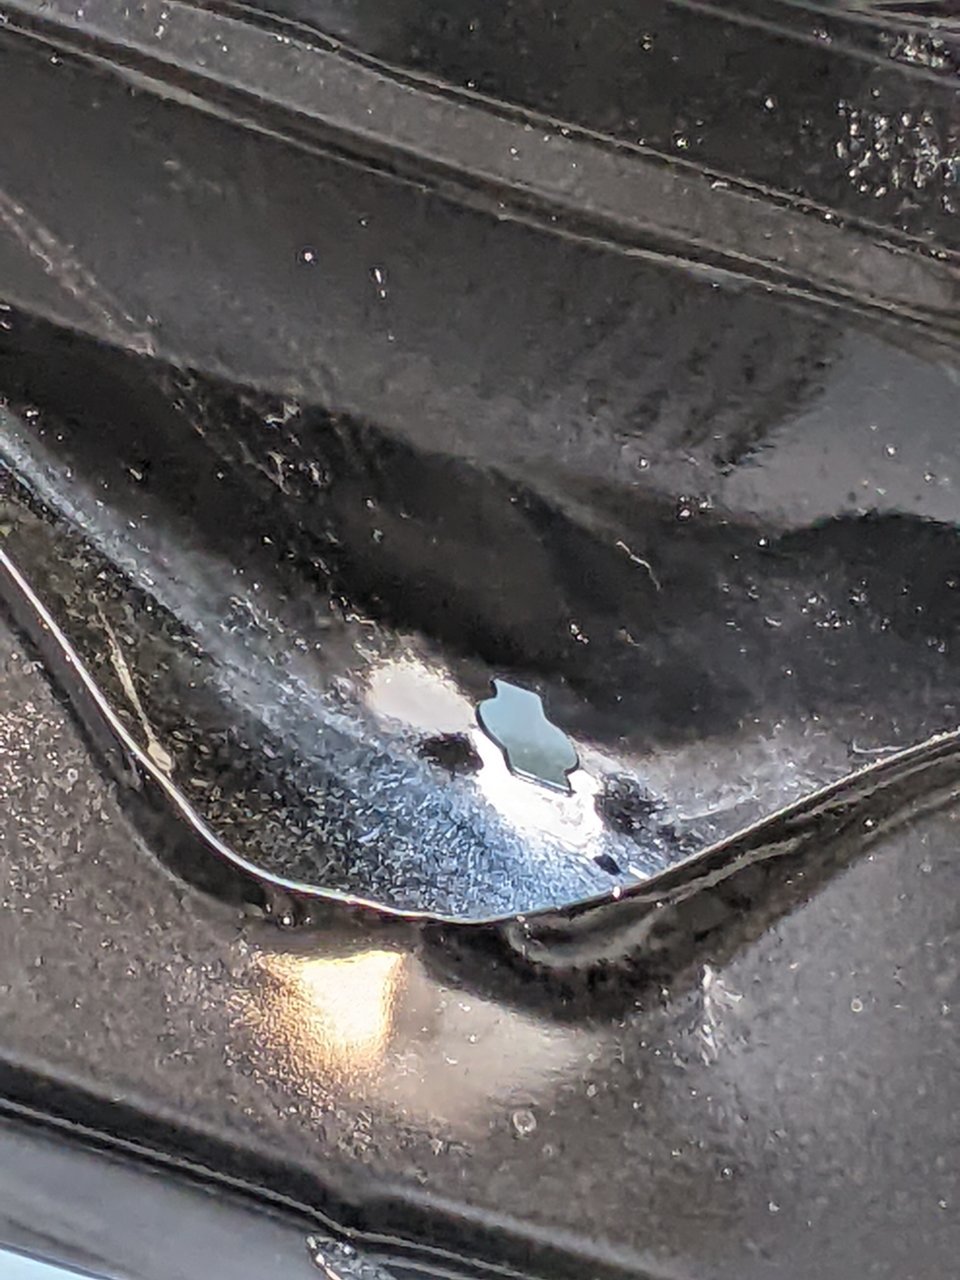 Adam's Detail Spray (2-Pack) - Quick Waterless Detailer Spray for Car  Detailing | Polisher Clay Bar & Car Wax Boosting Tech | Add Shine Gloss  Depth